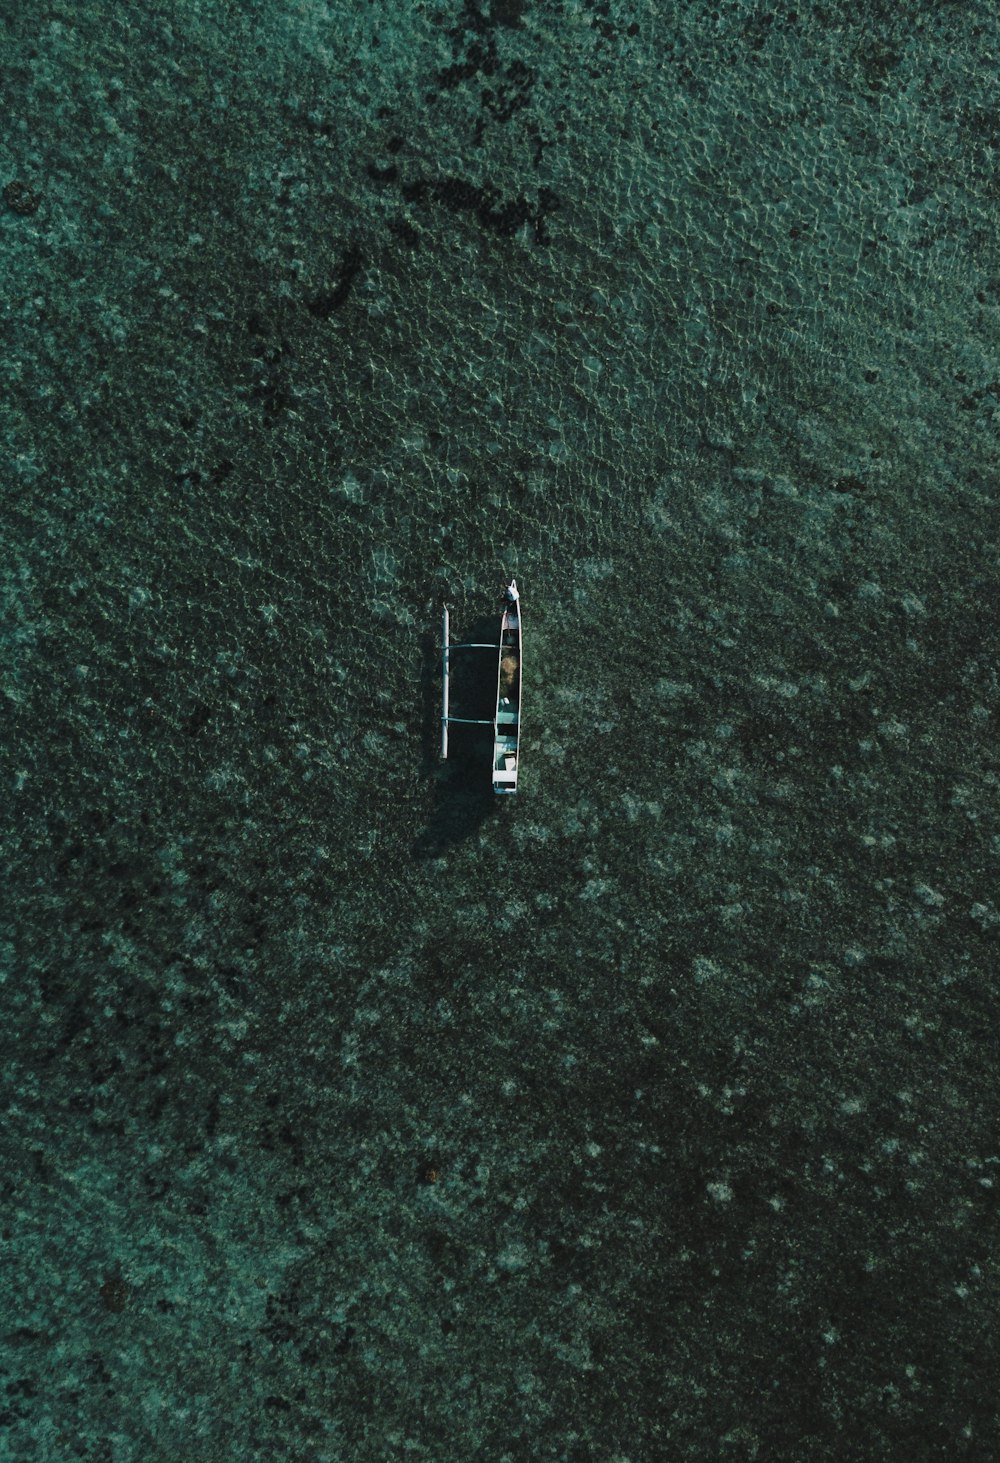 Boot auf grünem Boden